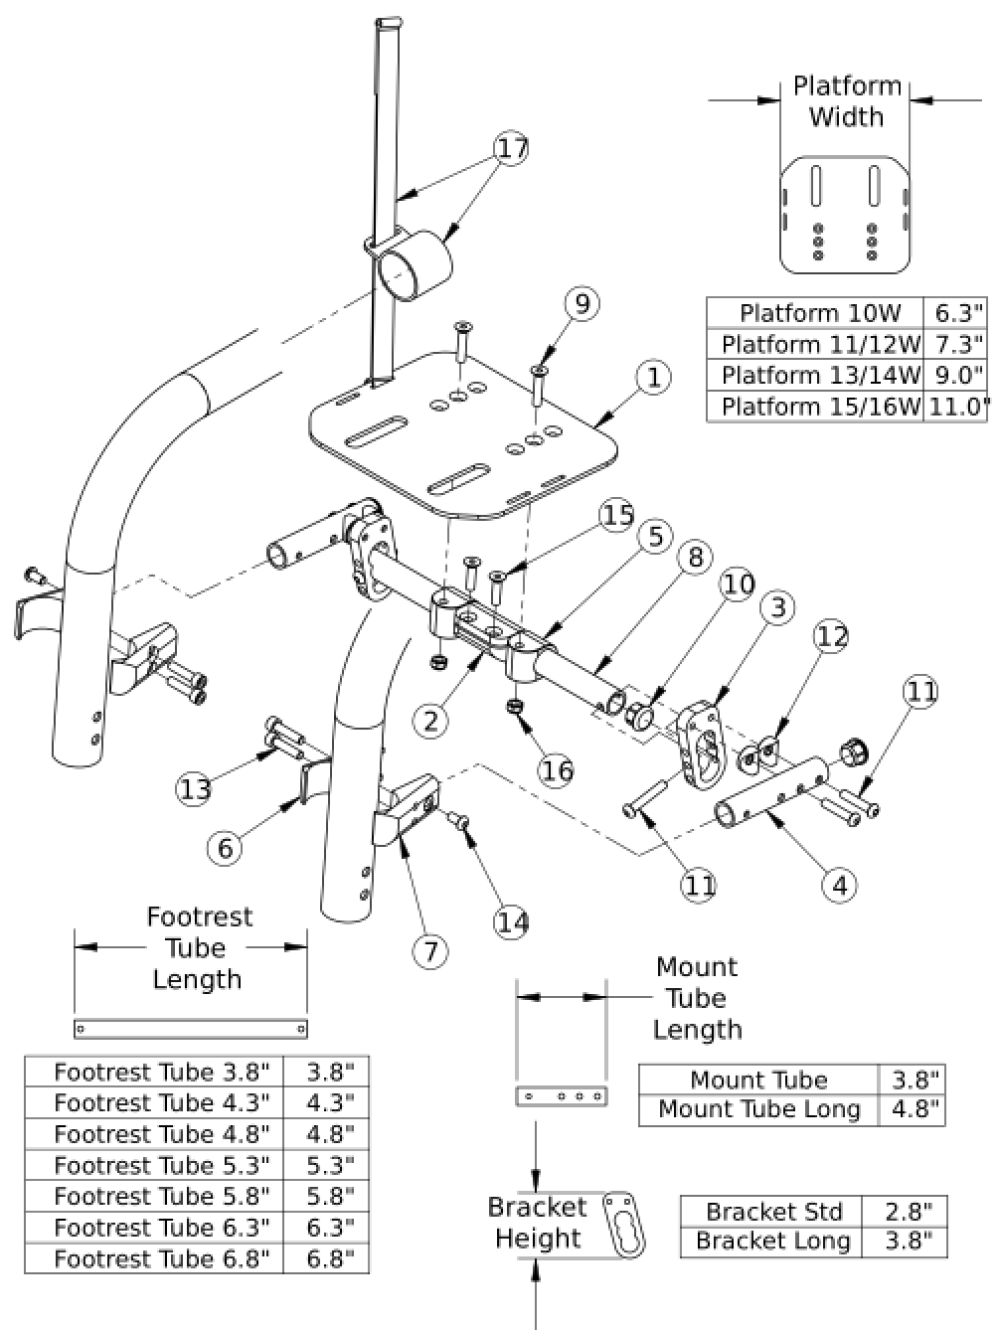 Rogue2 Footrest - Angle Adjustable Flip Under High Mount parts diagram